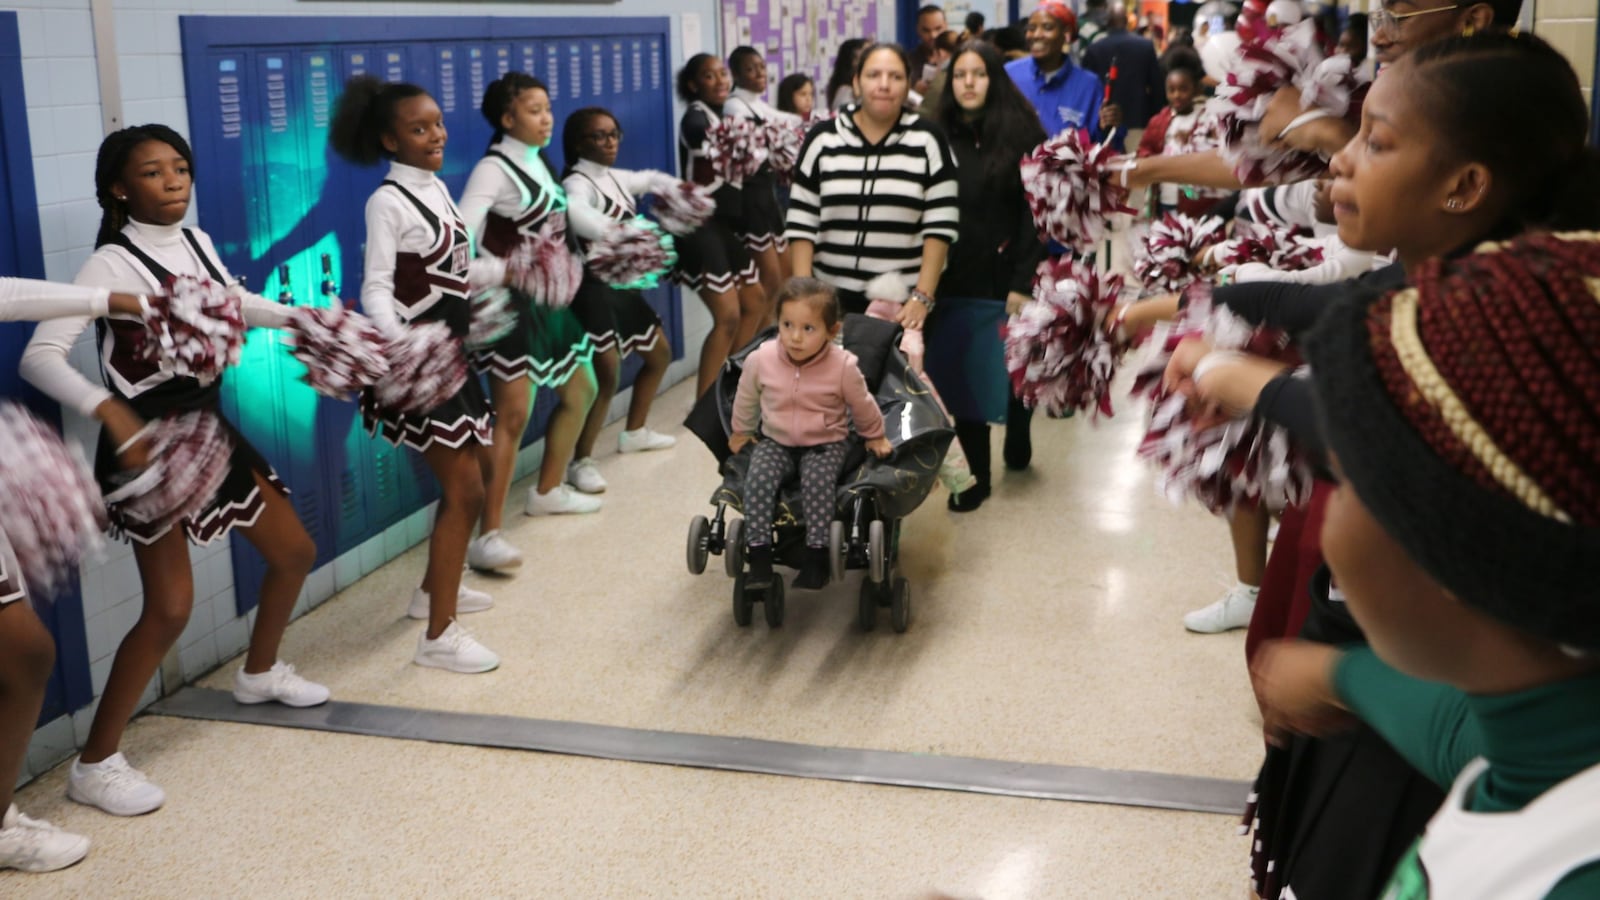 Cheerleaders from University High School greeted families at Newark's school enrollment fair on Saturday.